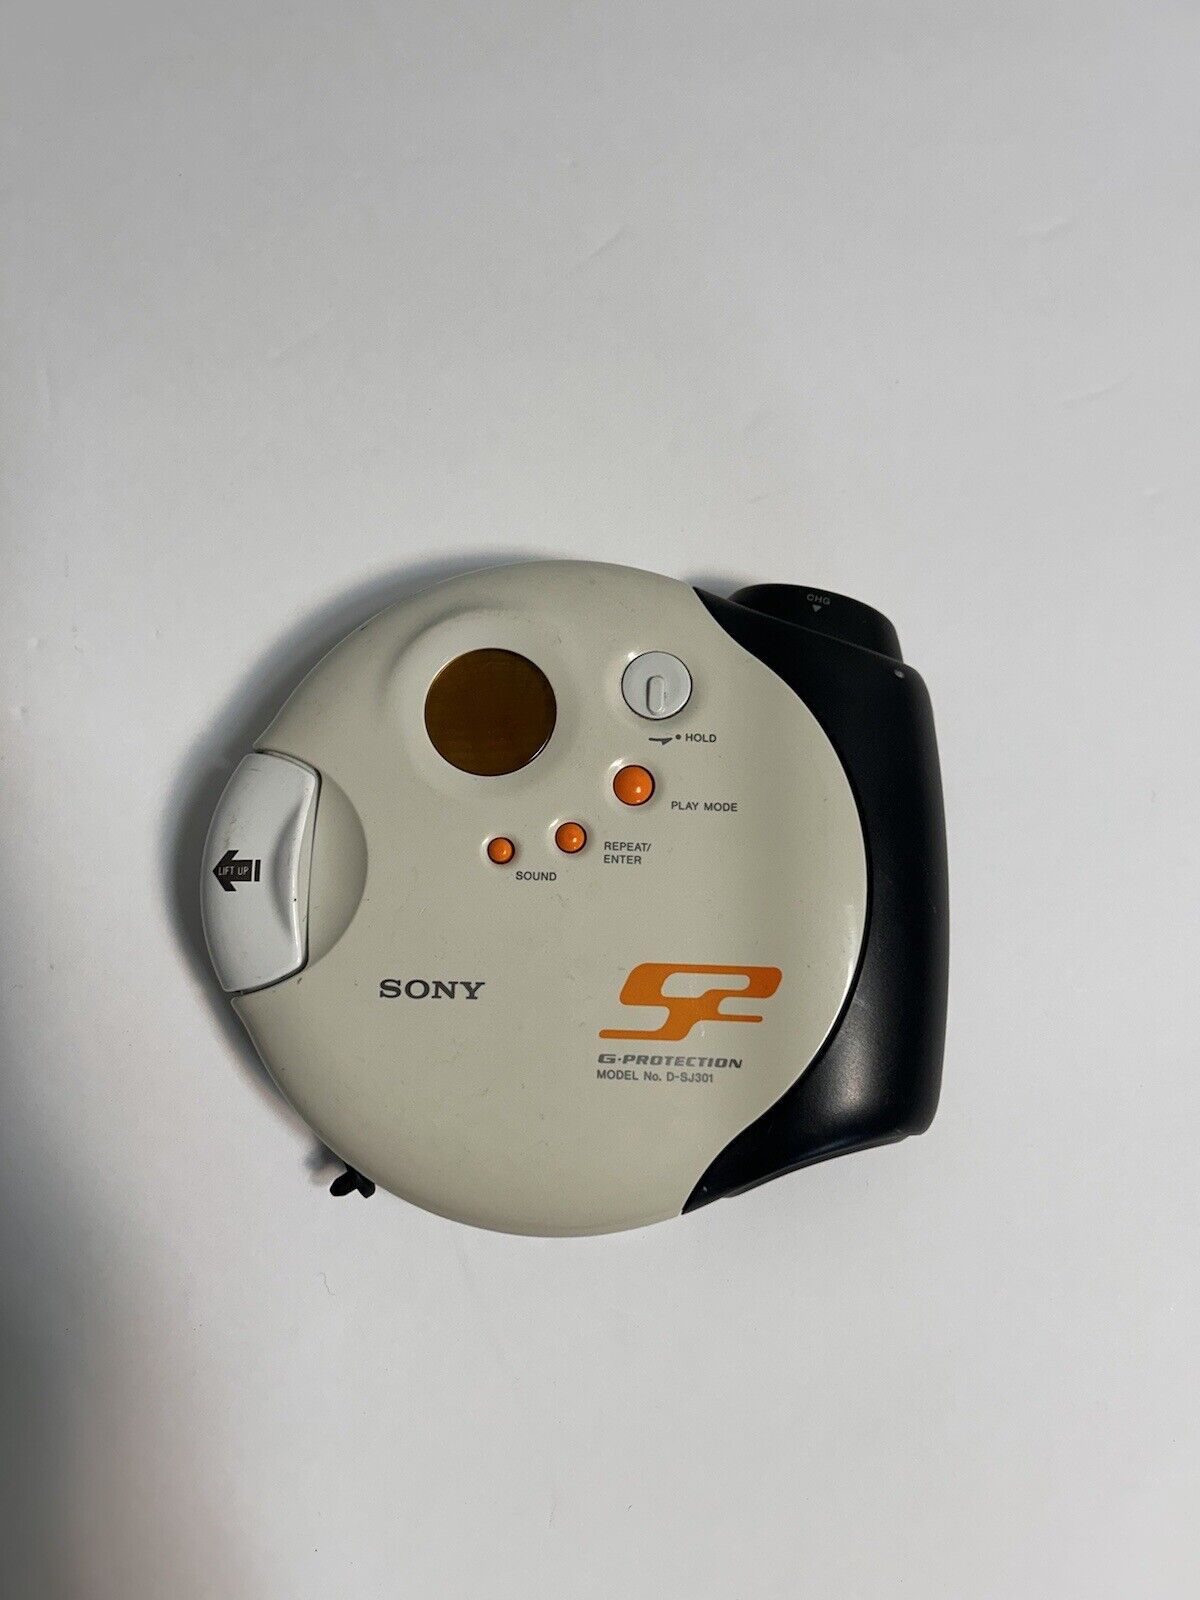 Sony S2 Sports CD Walkman - Portable CD Player - VGC  WORKS